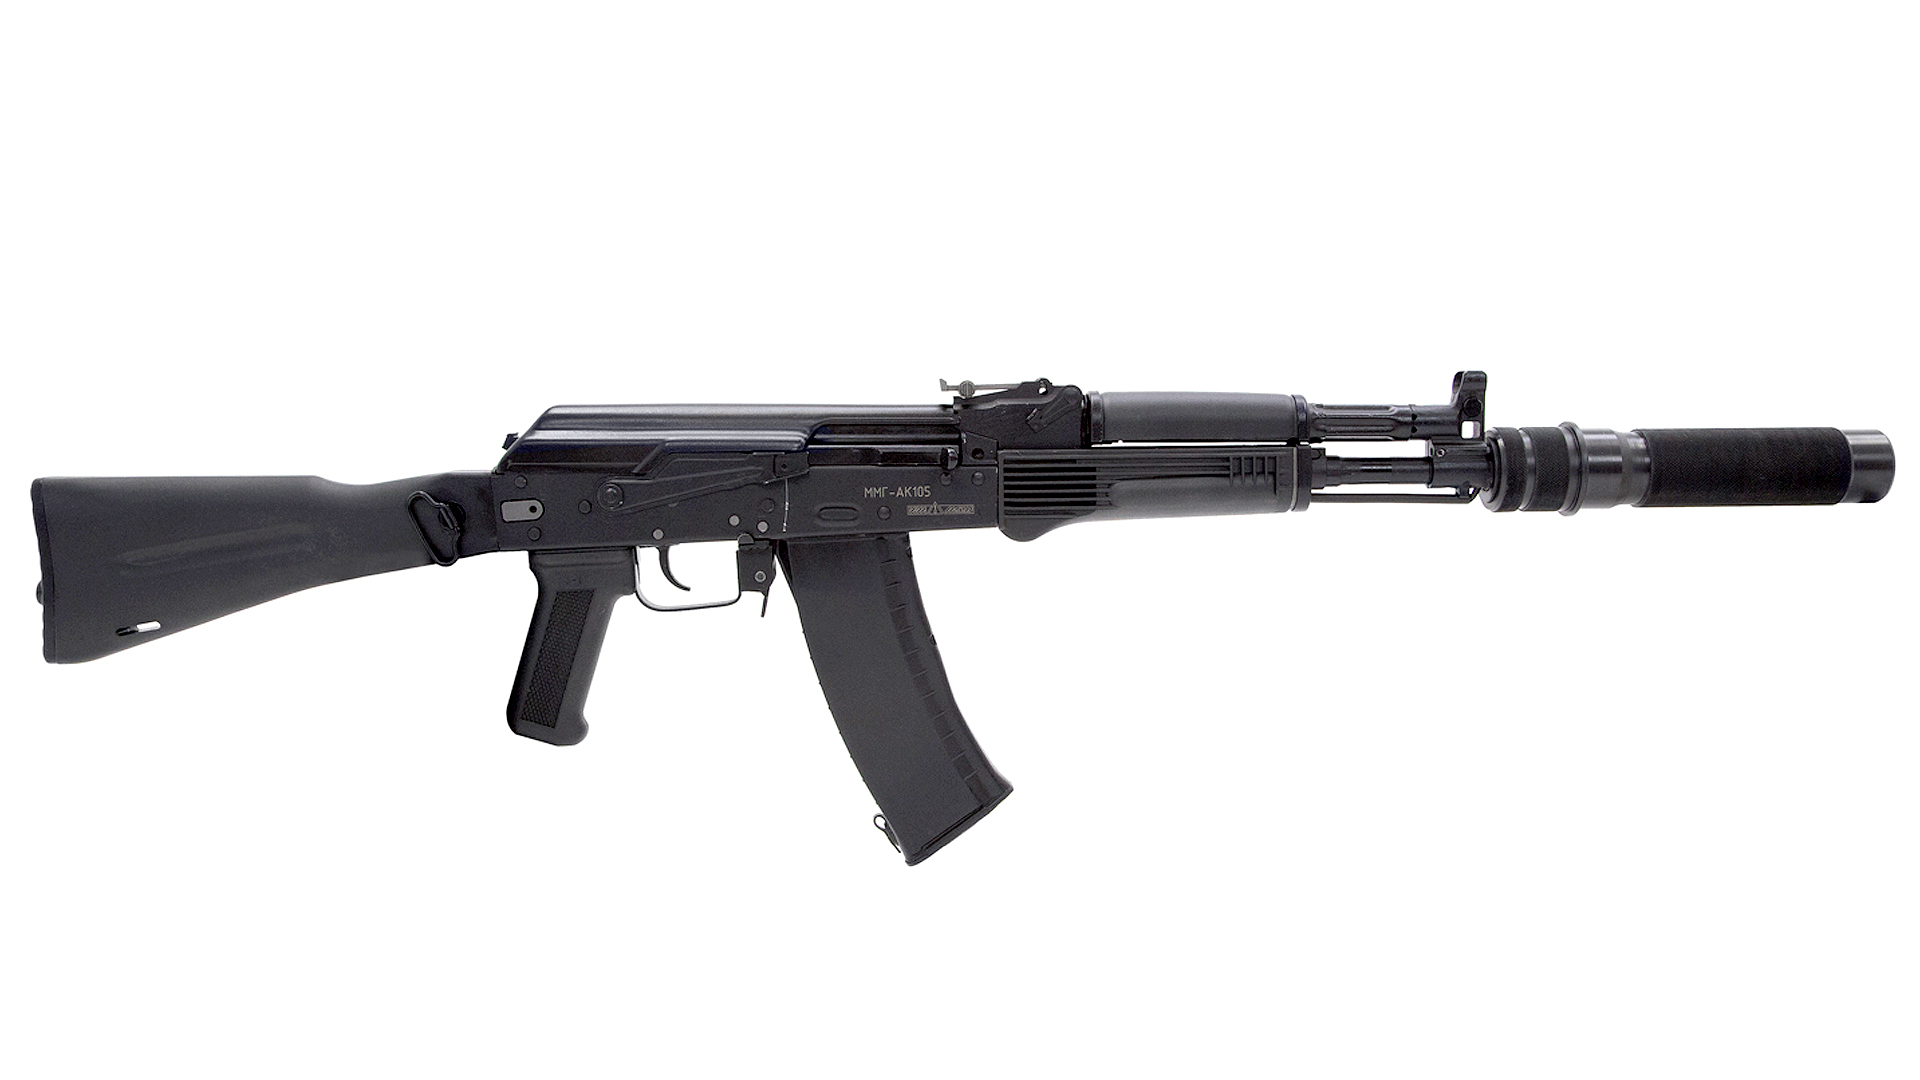 AK-105 BARS Steel Series photo 1